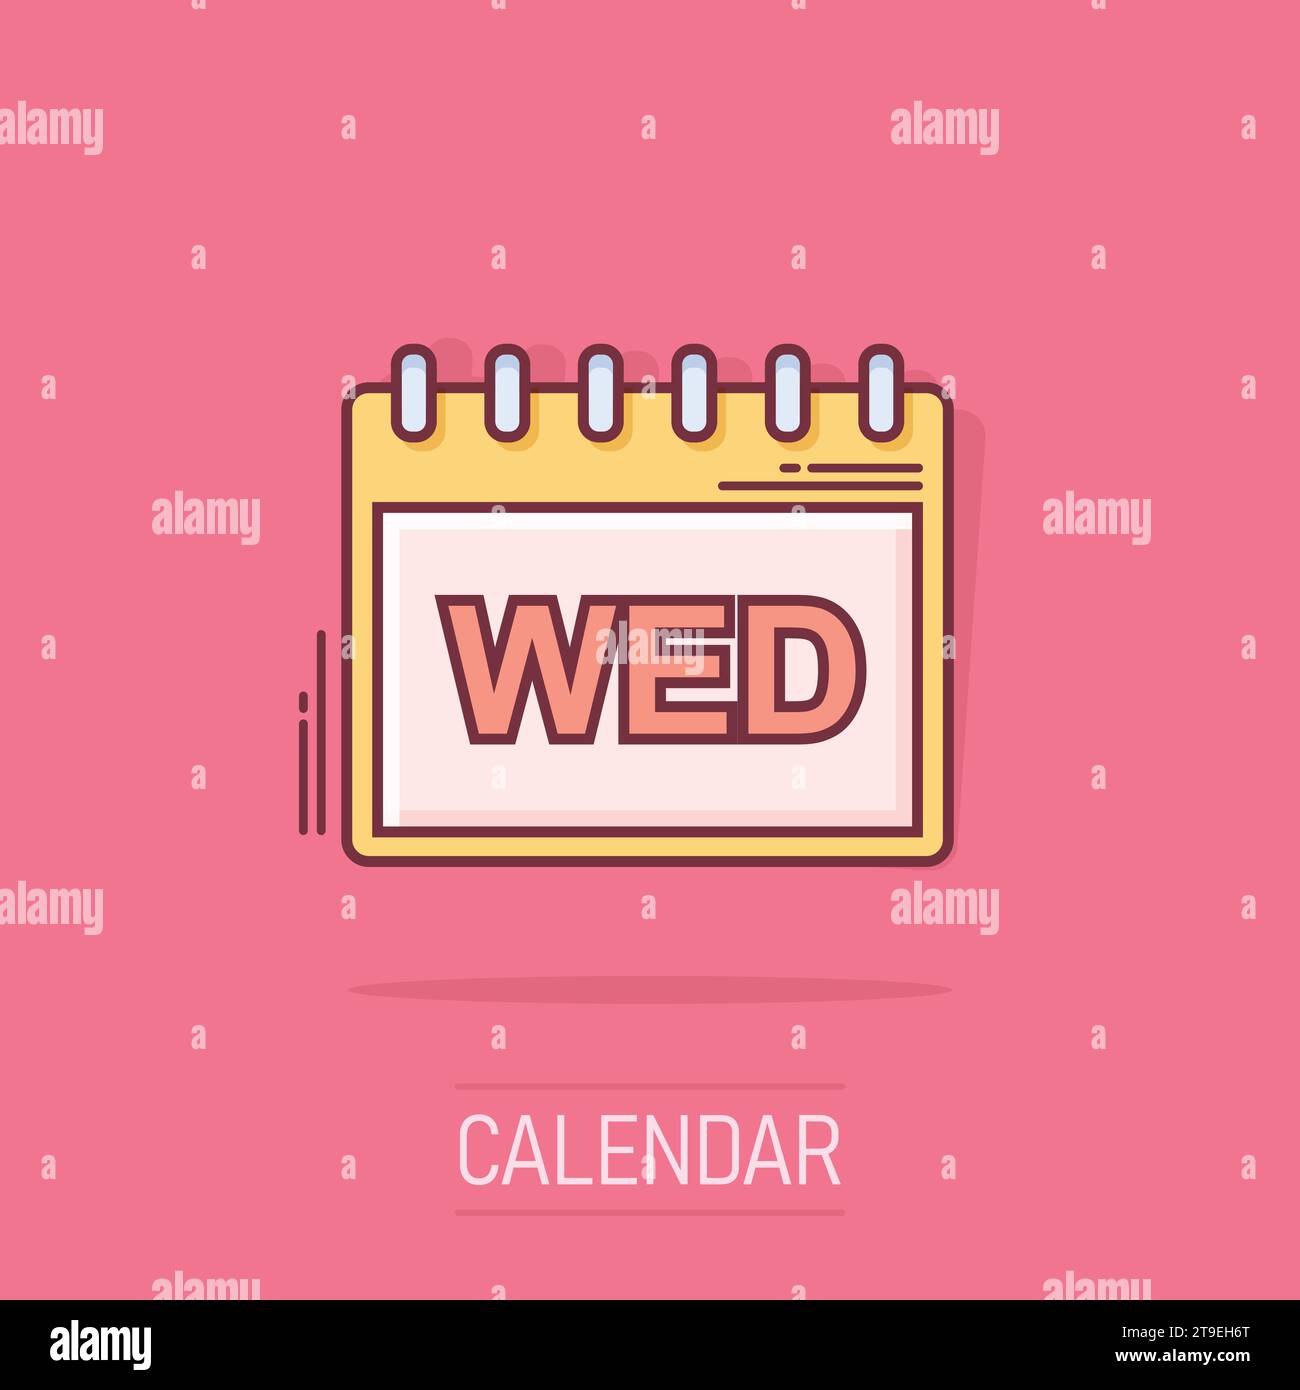 Vector cartoon wednesday calendar page icon in comic style. Calendar sign illustration pictogram. Wednesday agenda business splash effect concept. Stock Vector